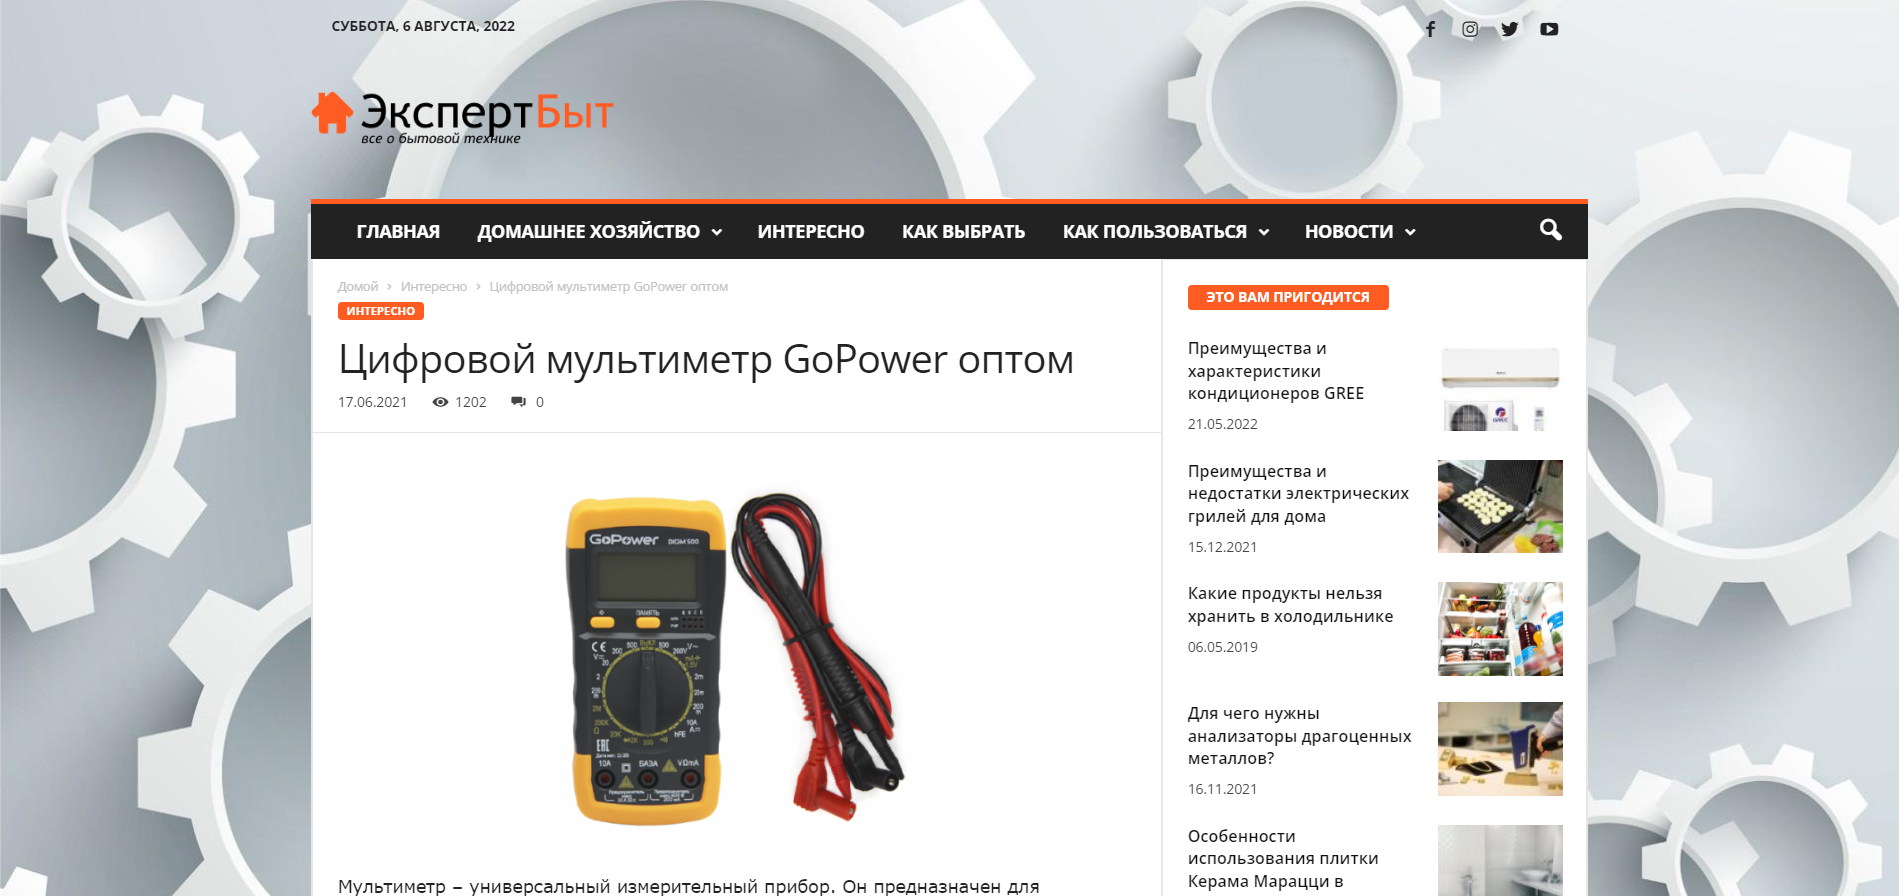 Цифровой мультиметр GoPower